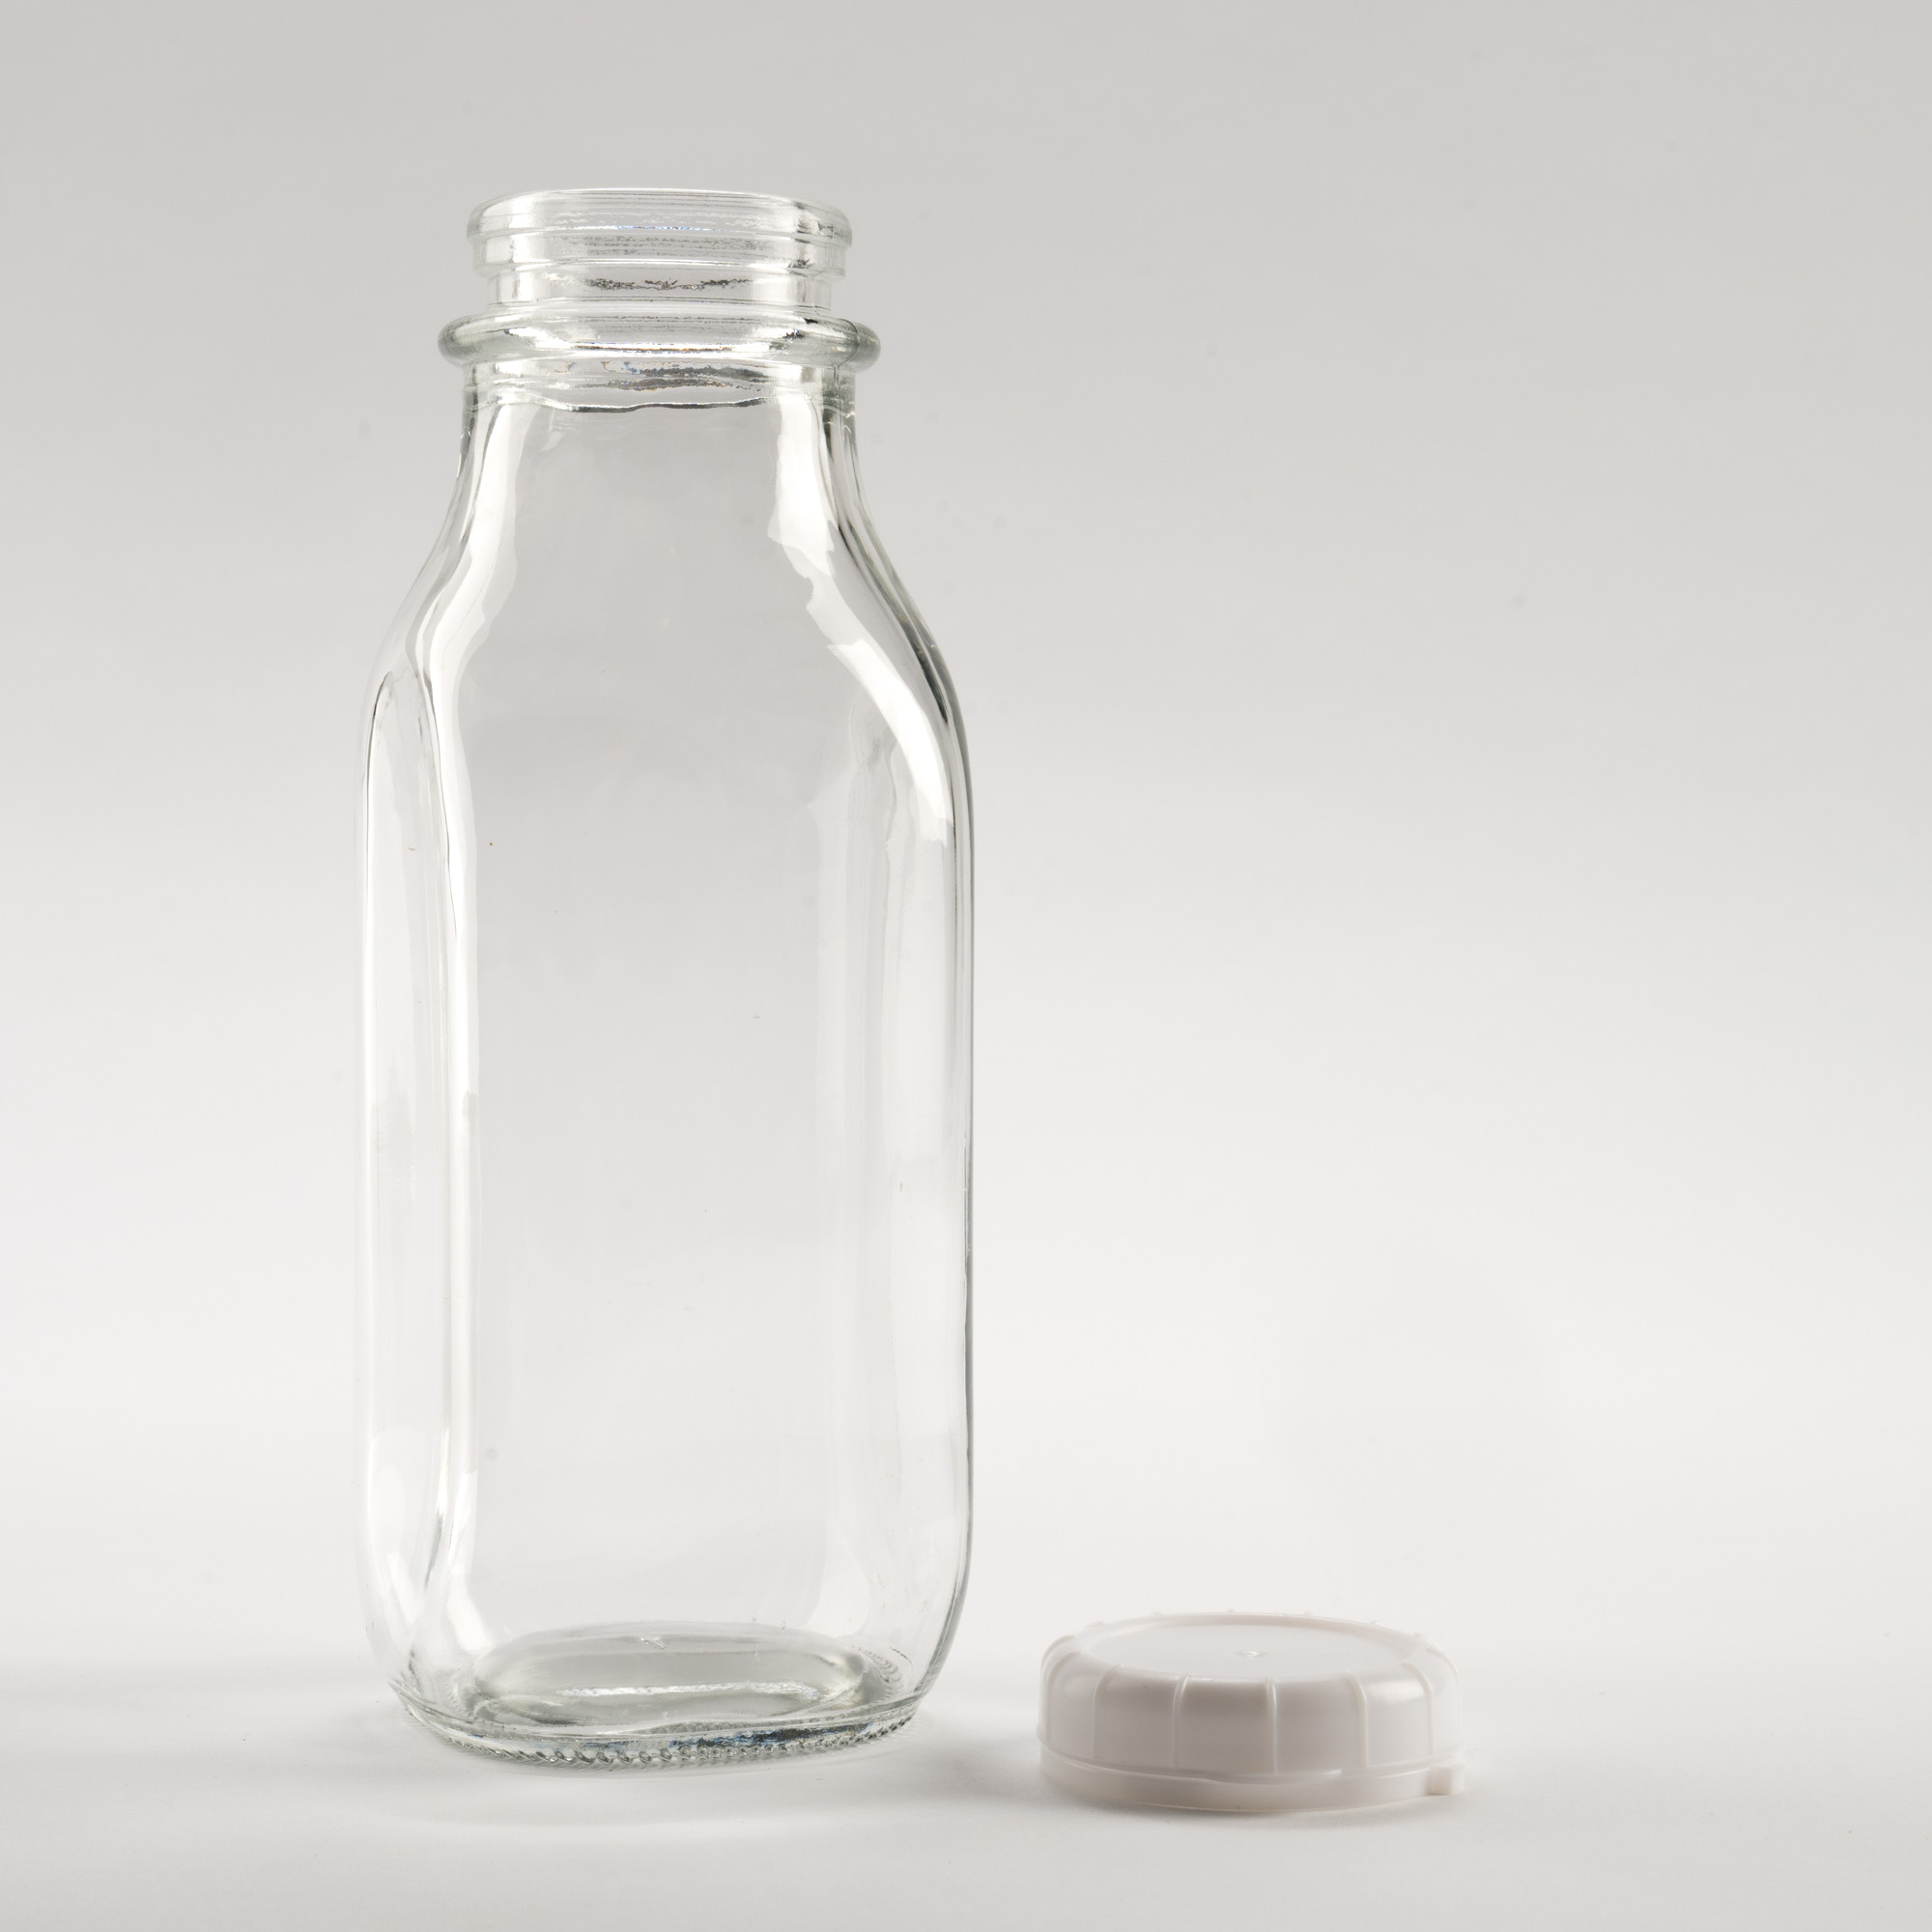 16 oz Glass Bottle - 1,428 qty pallet